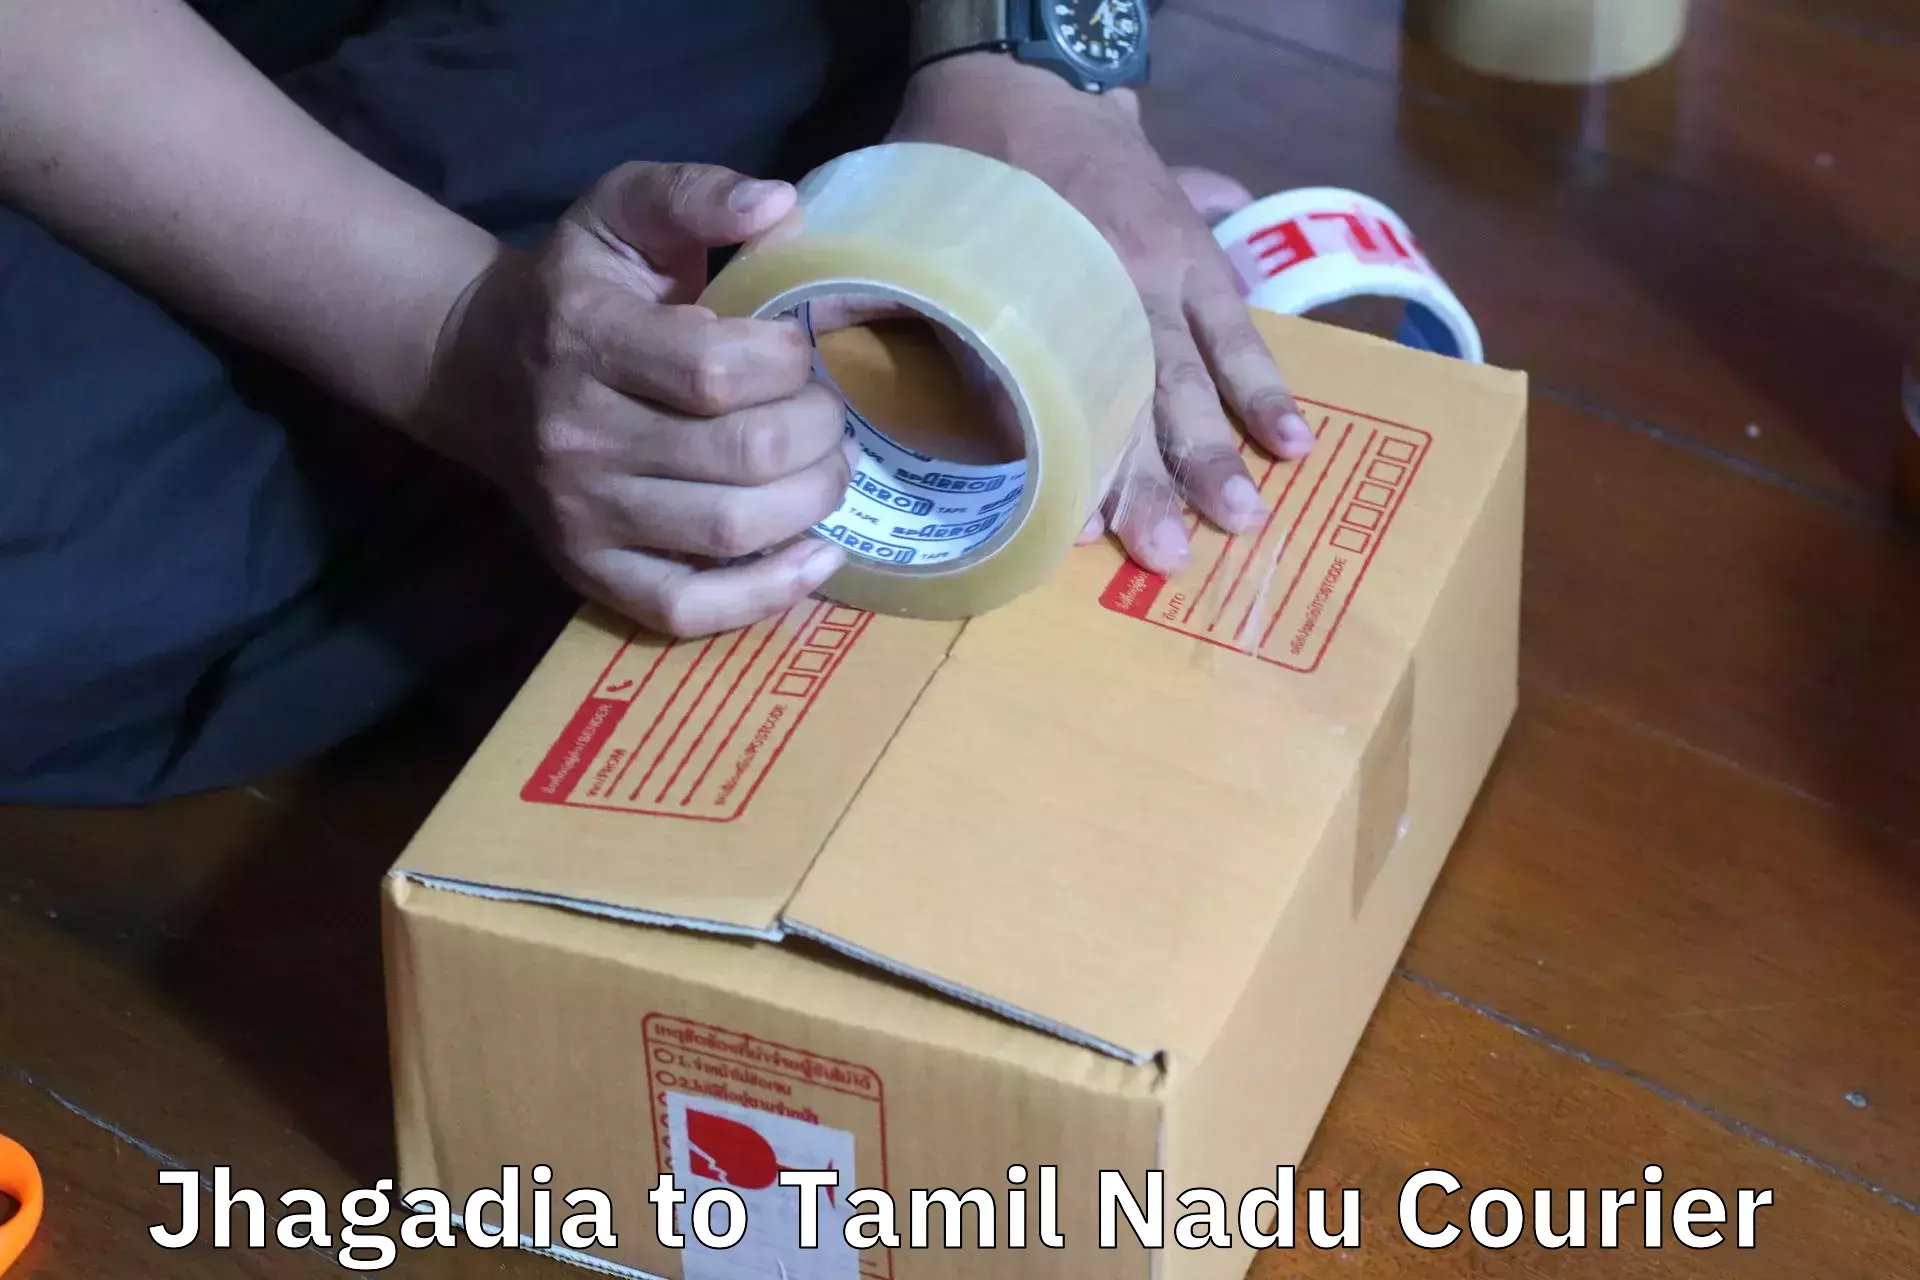 Professional moving company Jhagadia to Tamil Nadu